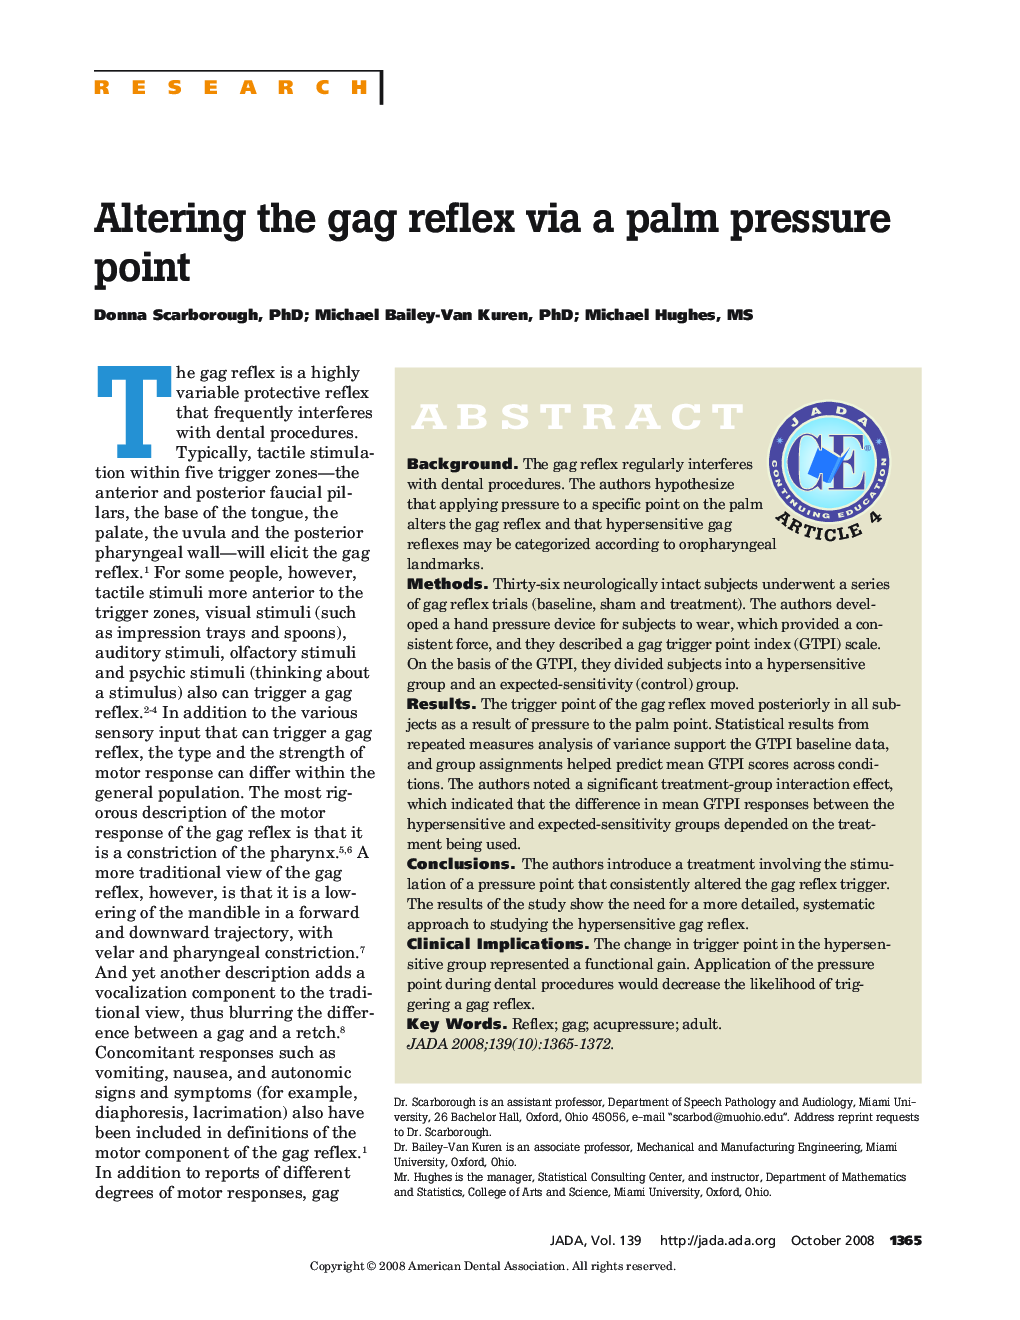 Altering the Gag Reflex Via a Palm Pressure Point 